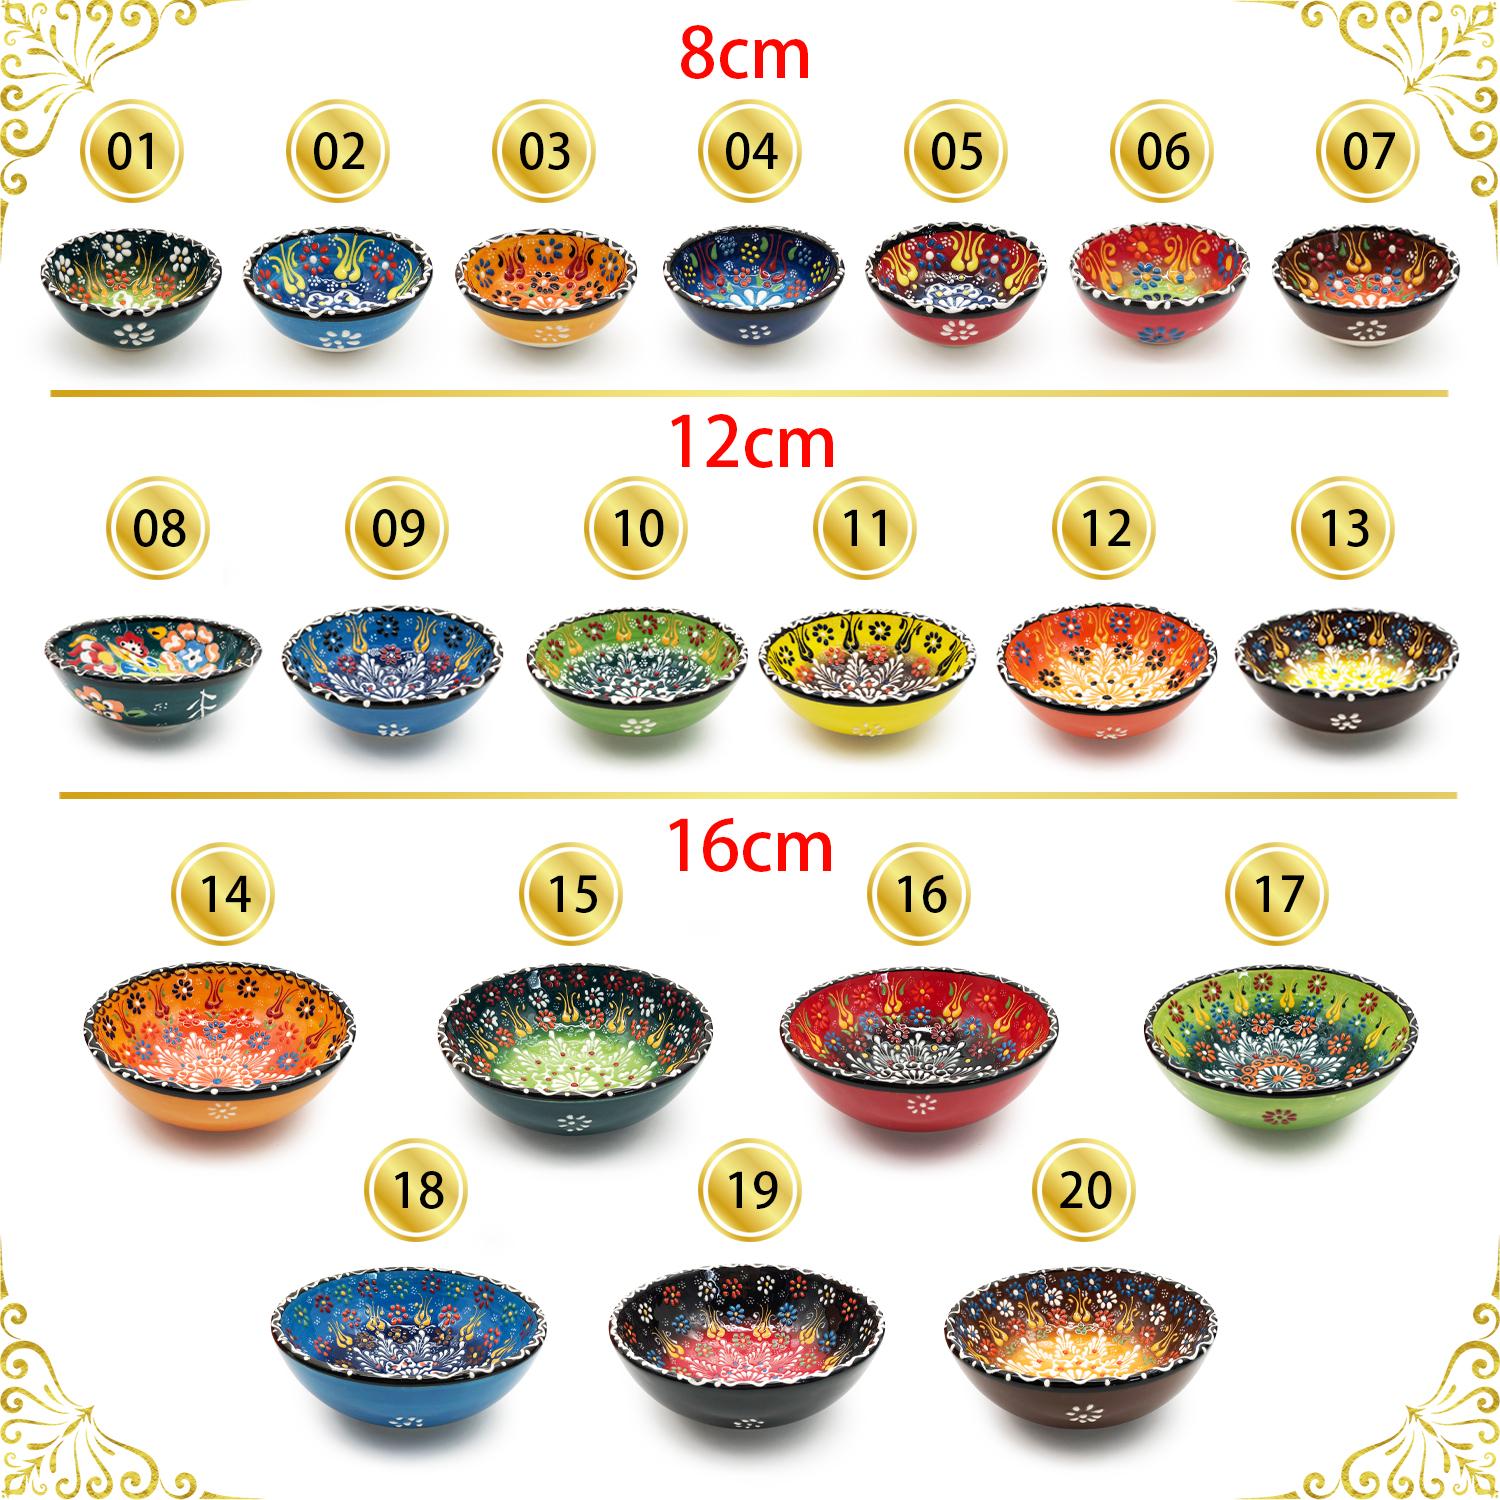 120MM手繪土耳其傳統工藝陶瓷碗， 土耳其餐具奧斯曼帝國浮雕圖案土耳其藝術時尚潮物(VTR-CERAMIC-BOWL-120MM-30103)